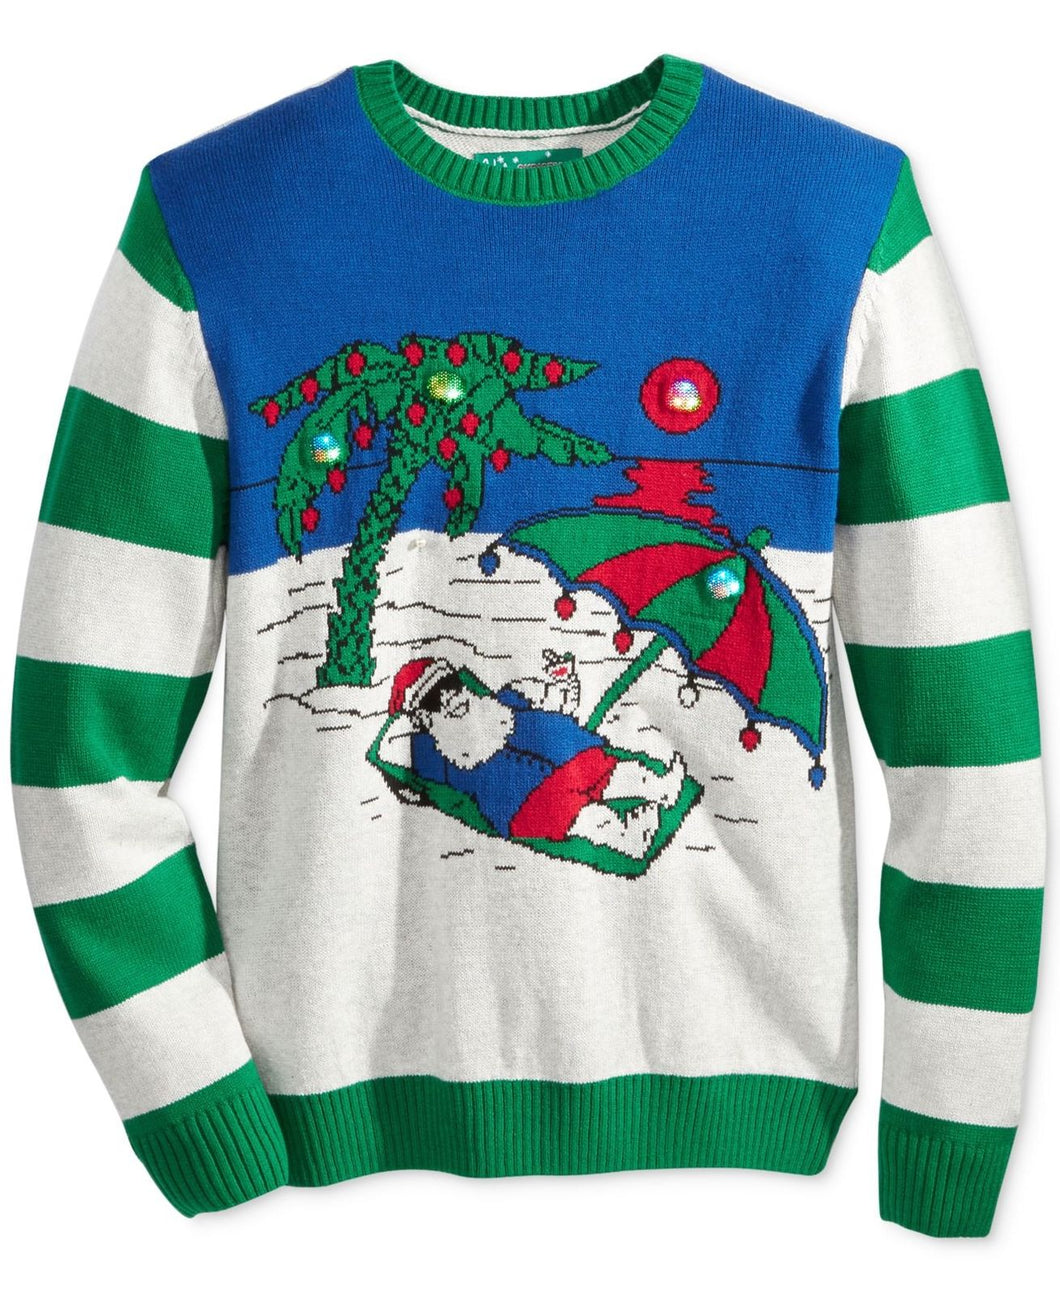 Ugly Christmas Sweater Men's Santa Beach Time Light-Up Sweater Medium